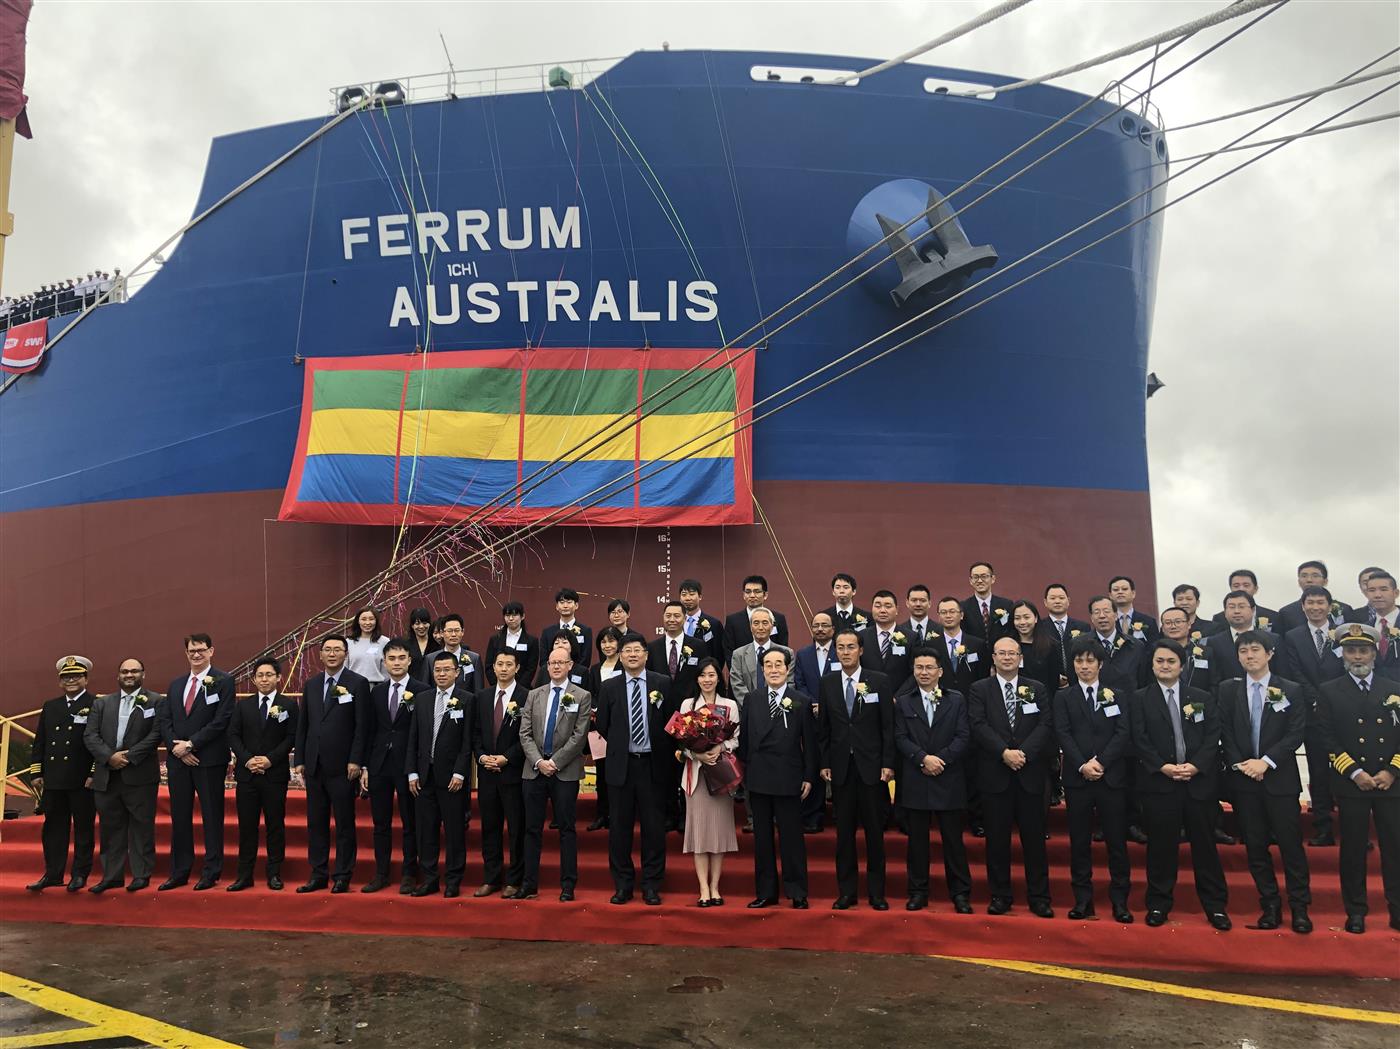 New Take Over Vessel Ferrum Australis